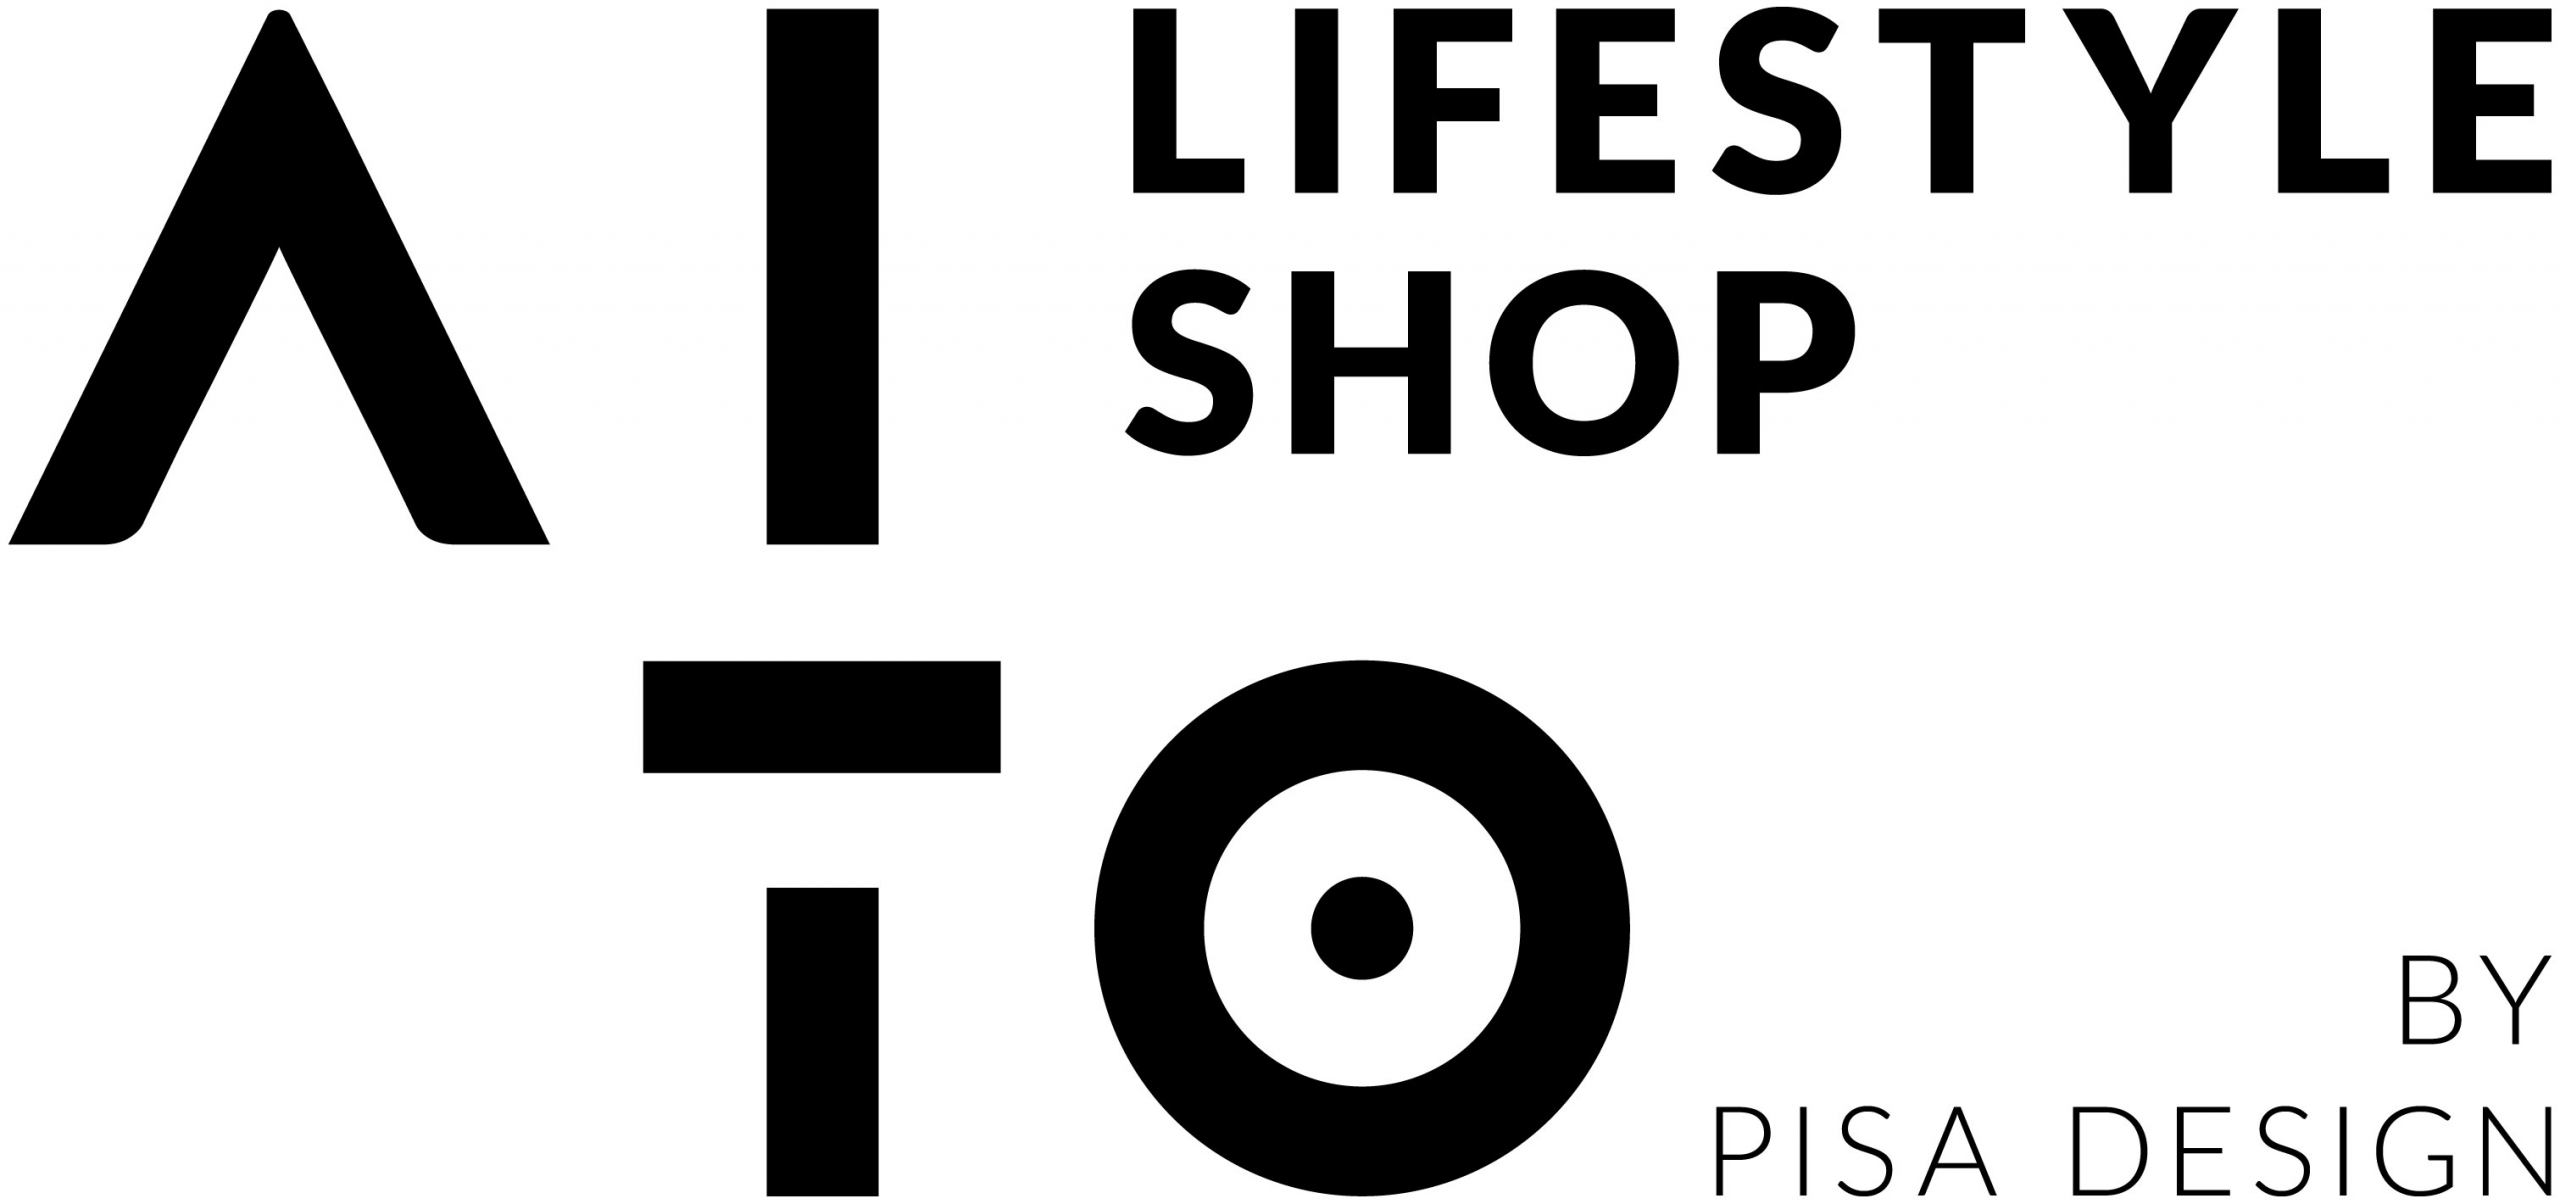 AITO_lifestyle shop